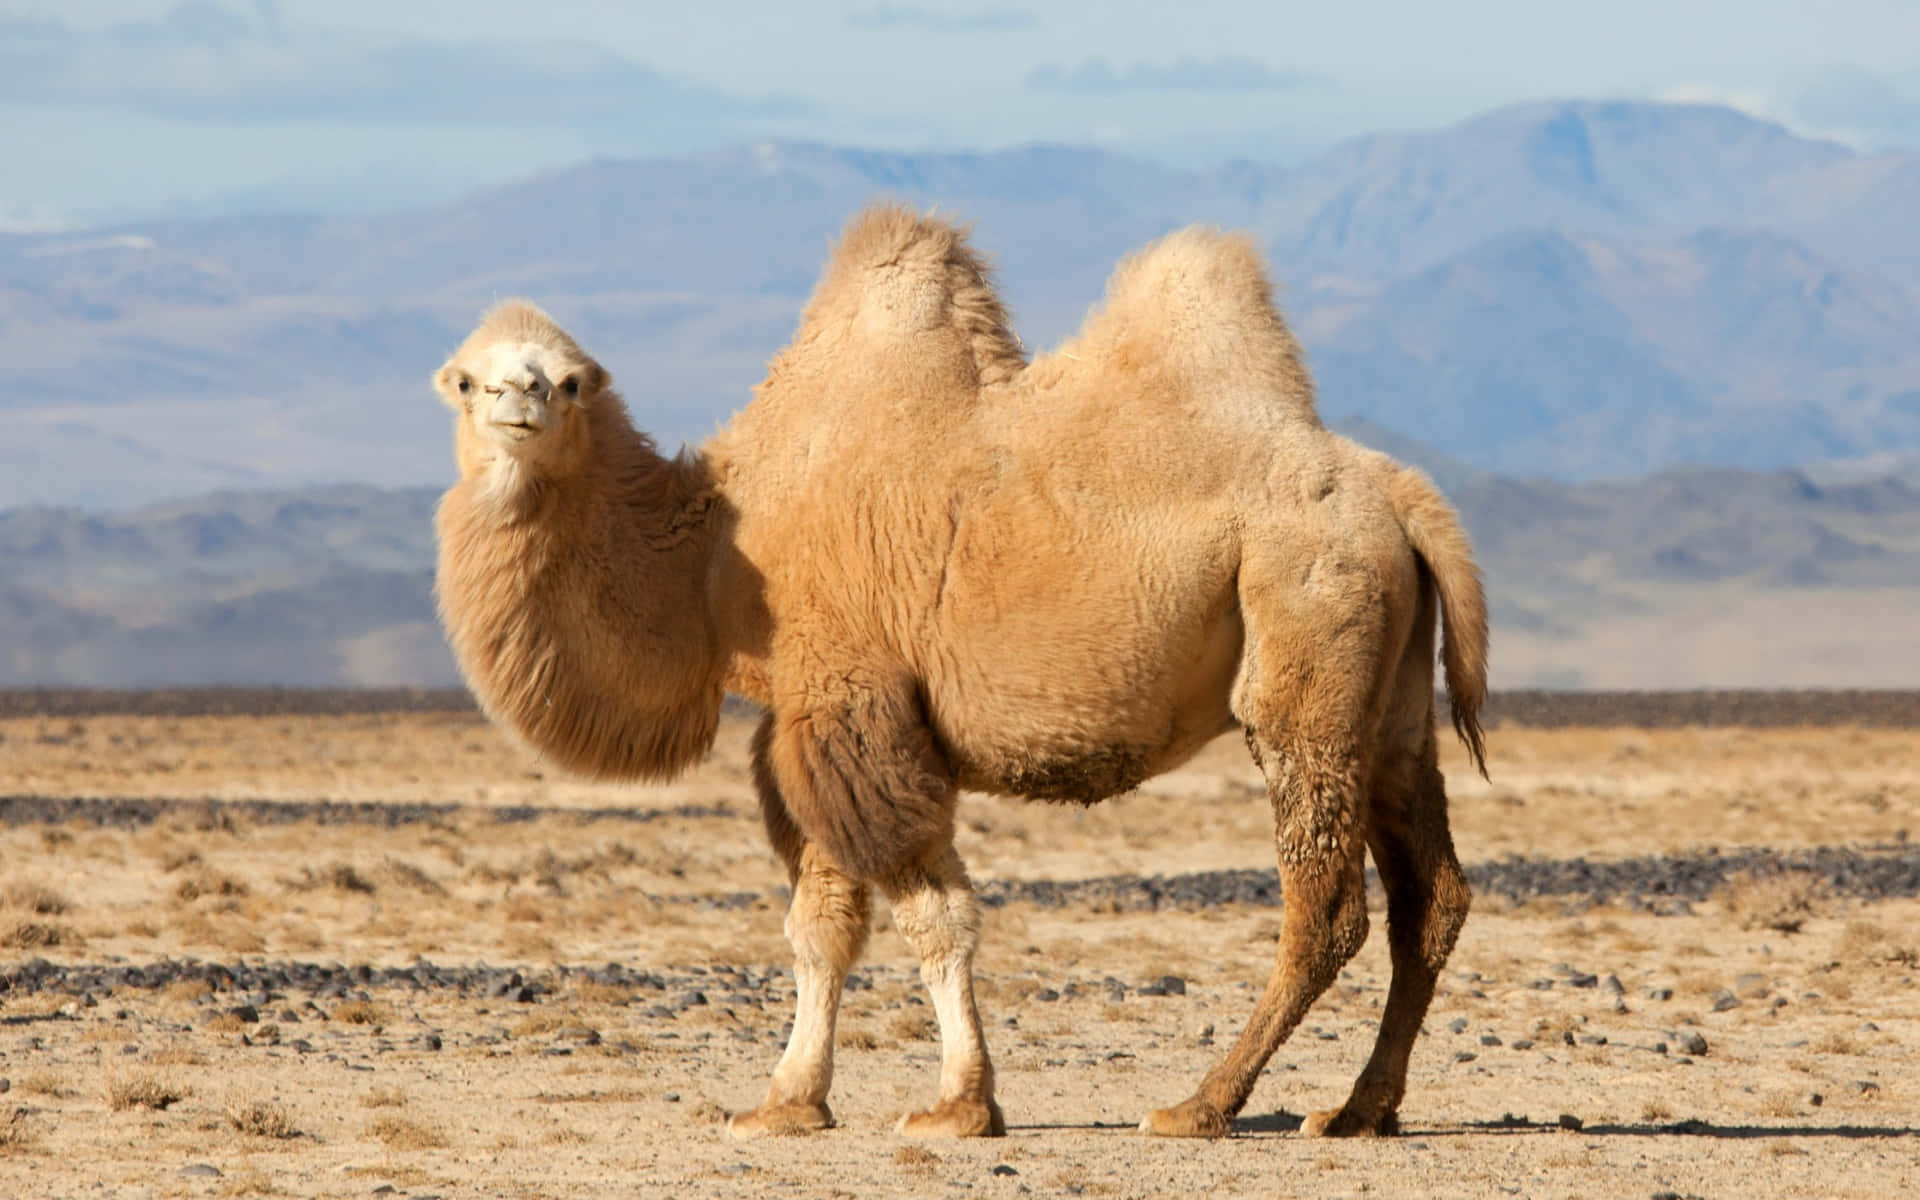 A happy camel stands on a desert landscape at sunset.